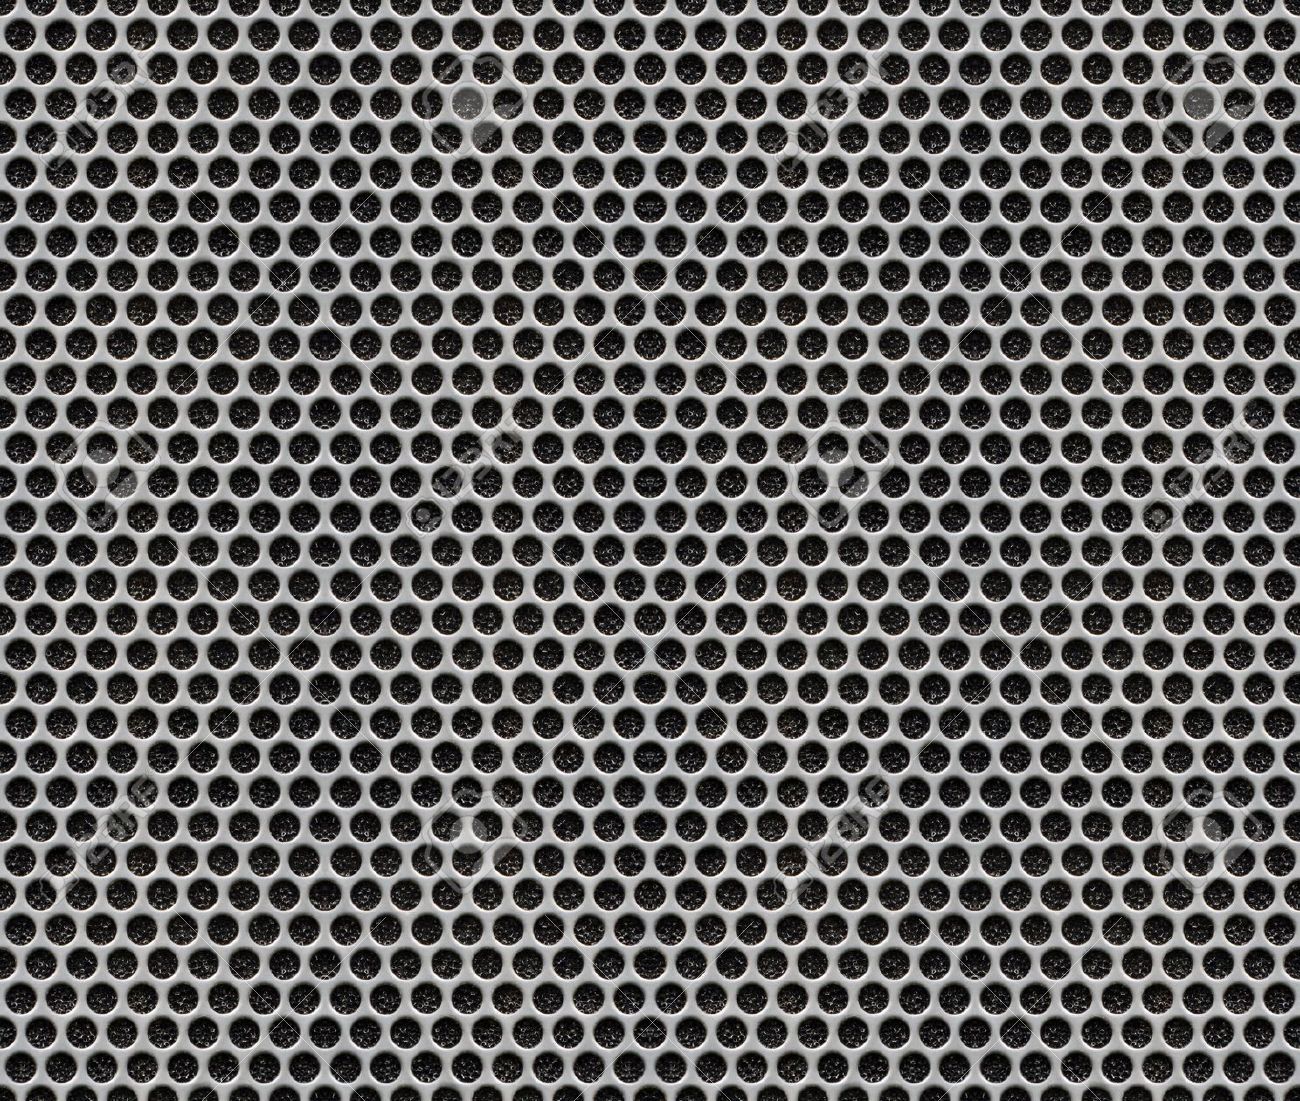 grid pattern texture1